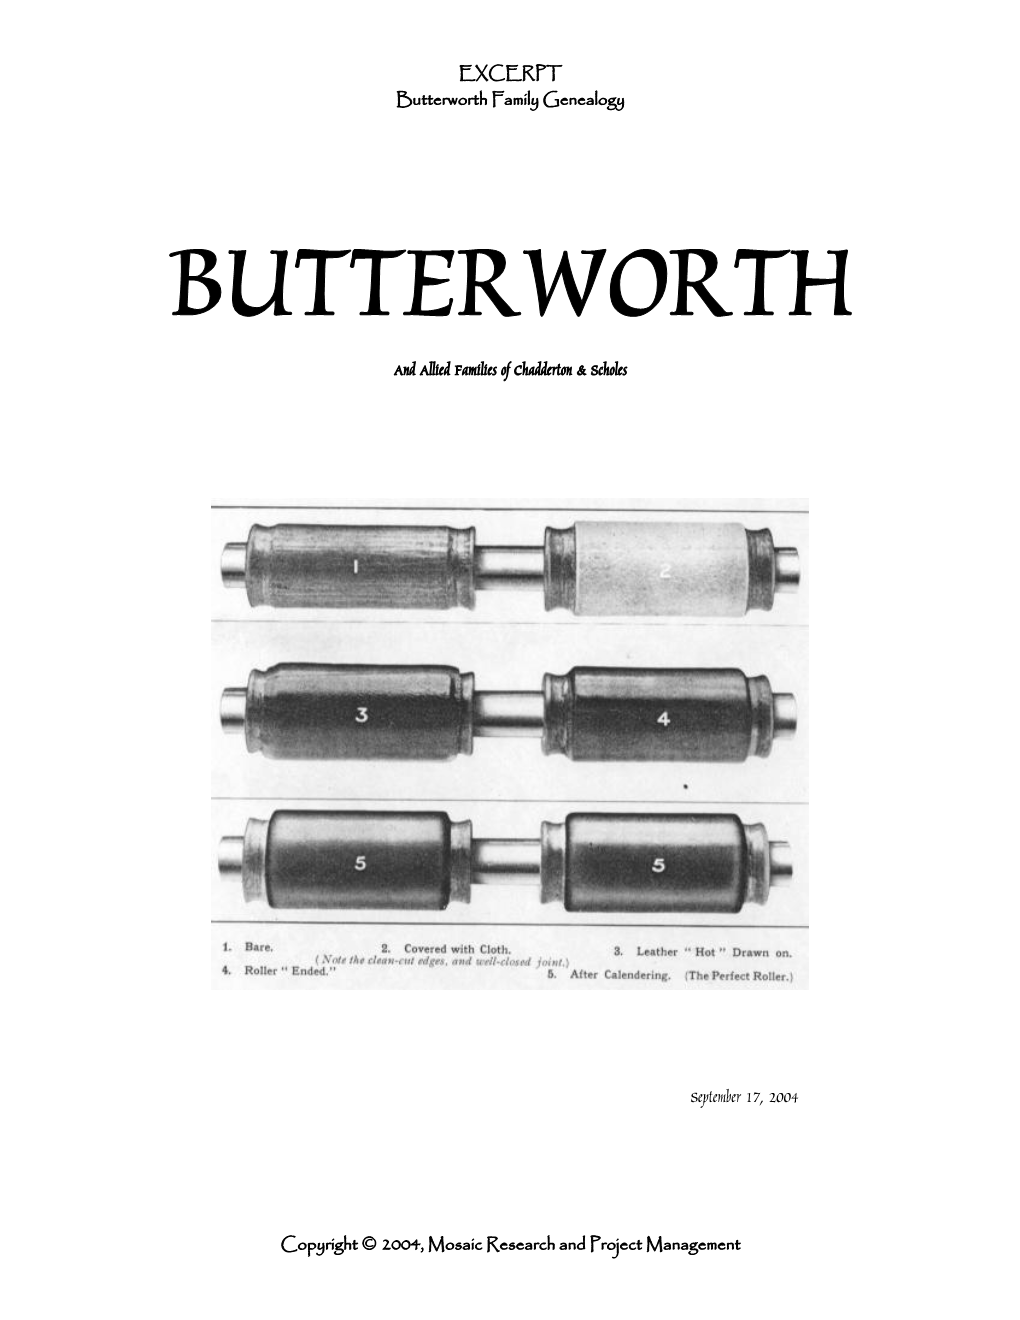 Butterworth Family Genealogy